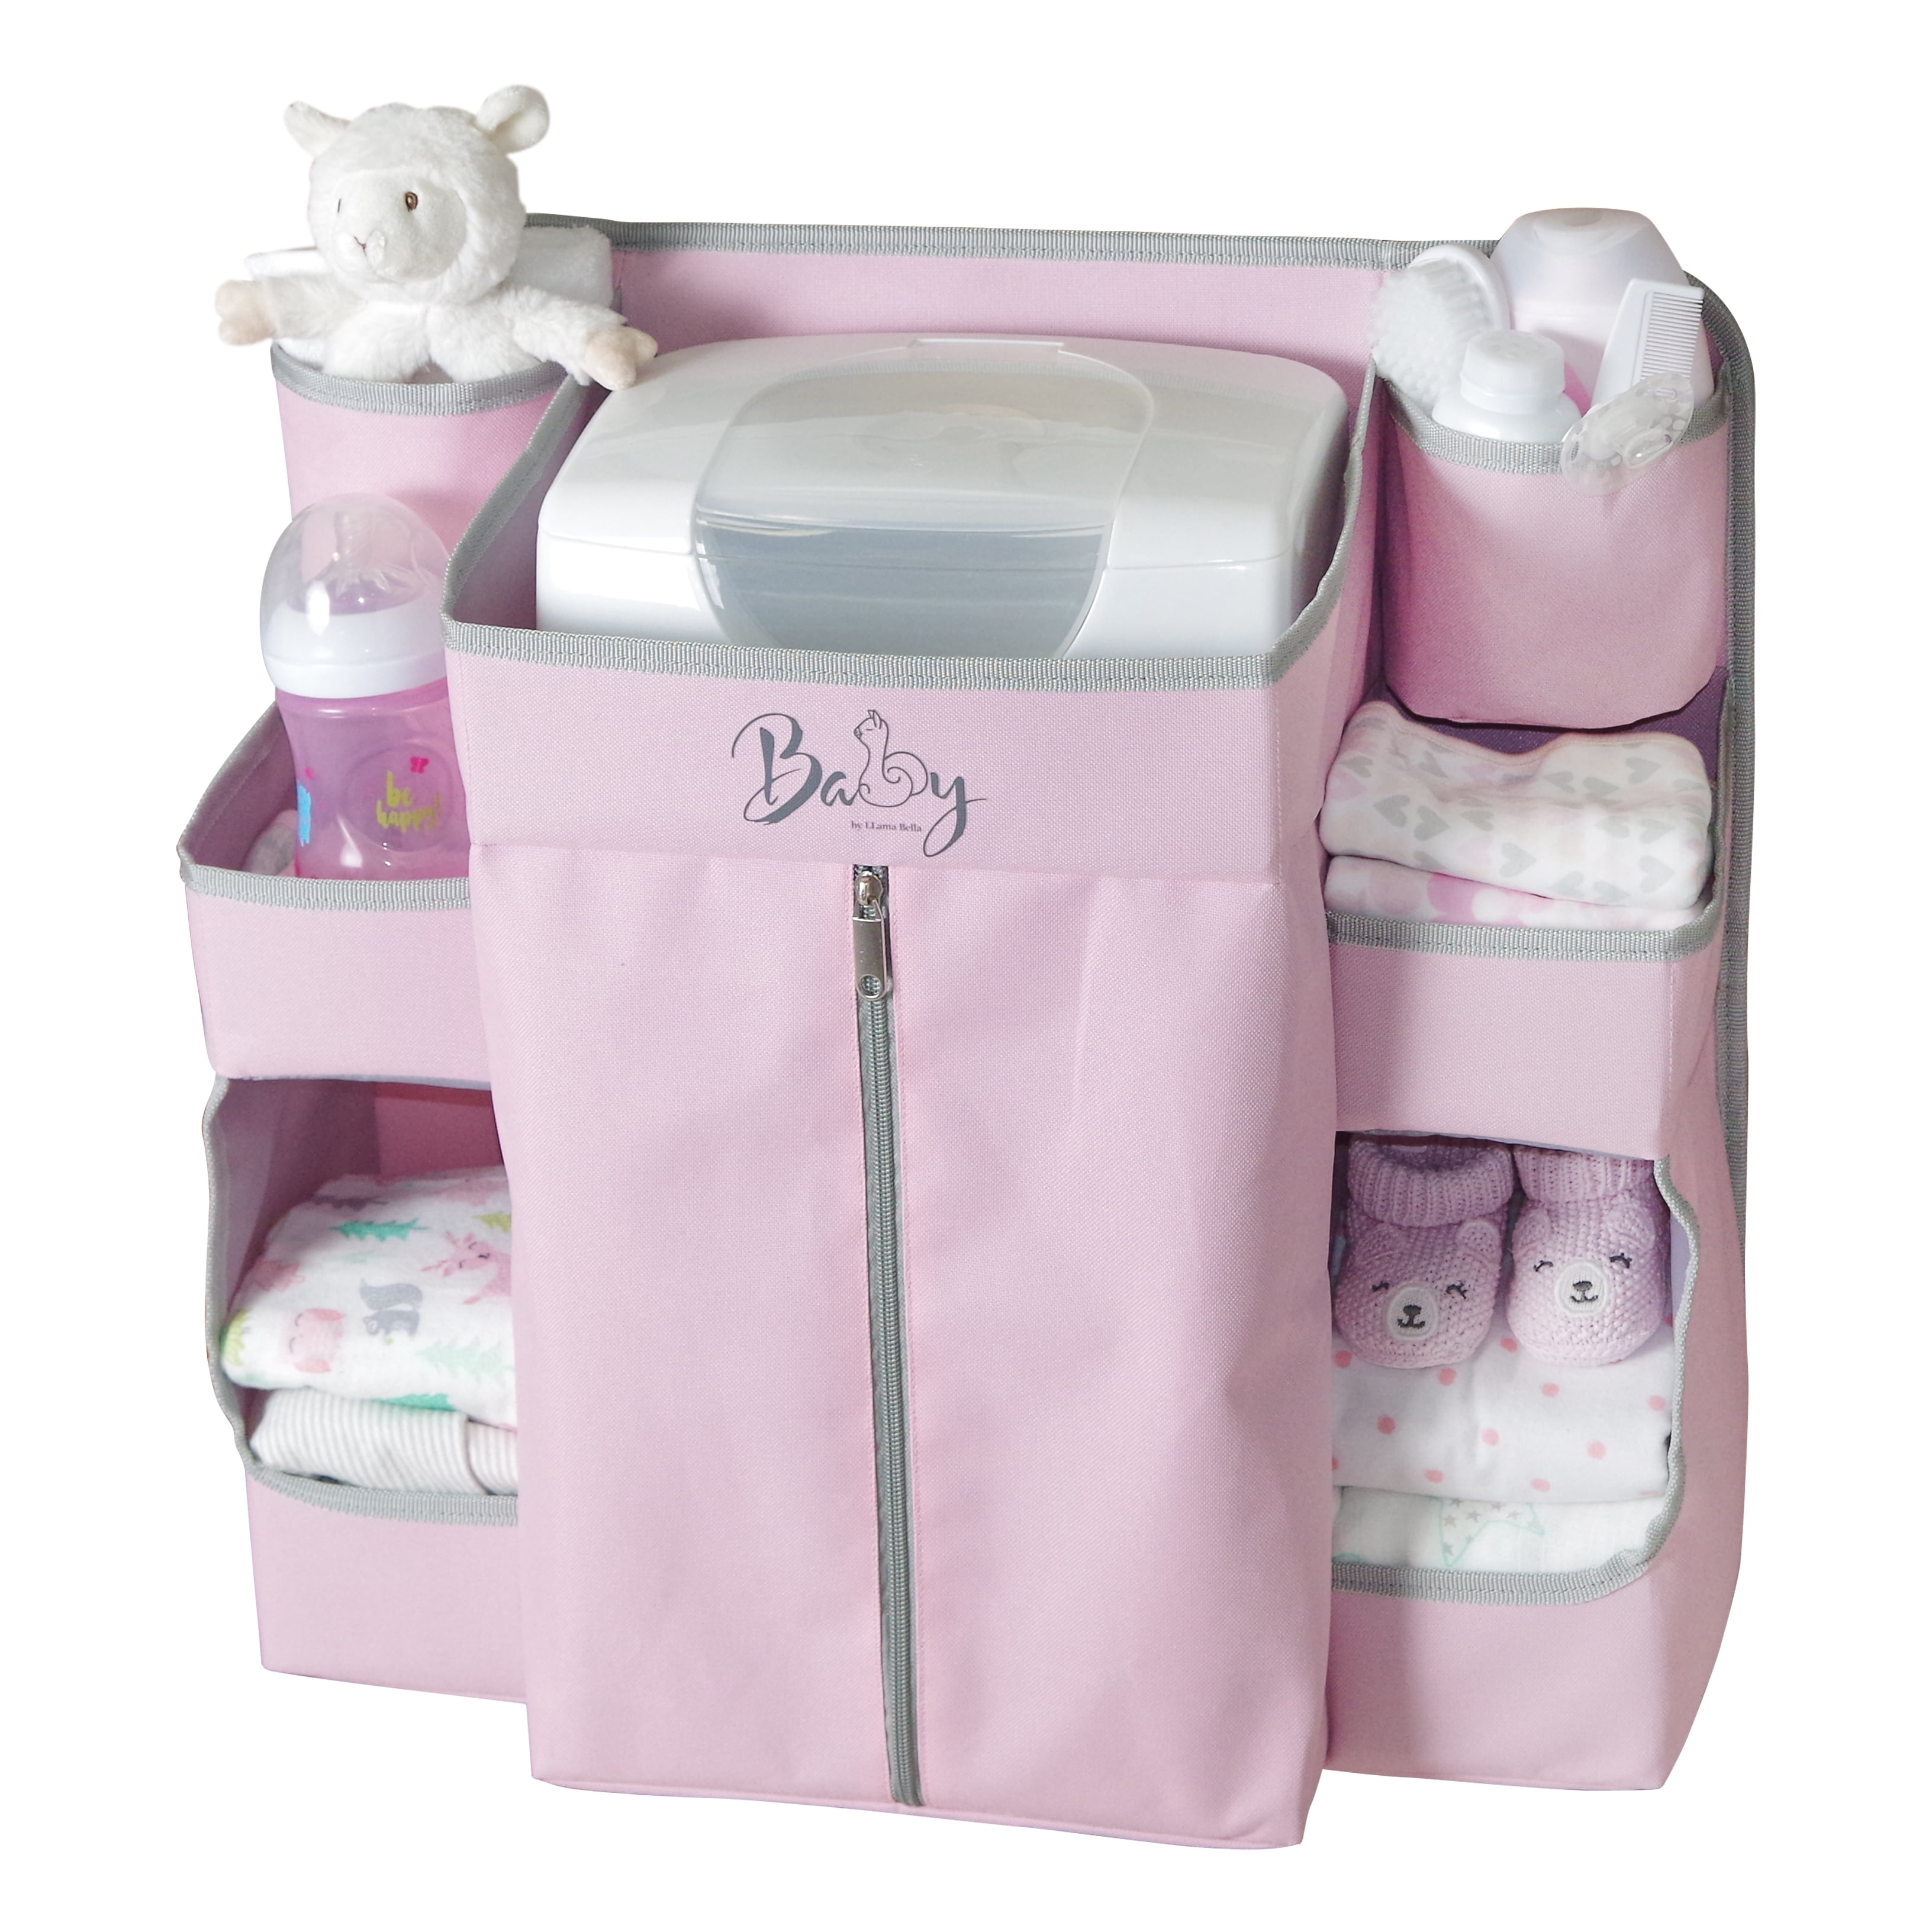 Nappy Dispenser Diaper Change Holder Storage Organiser Box with 10 Waste Bag 